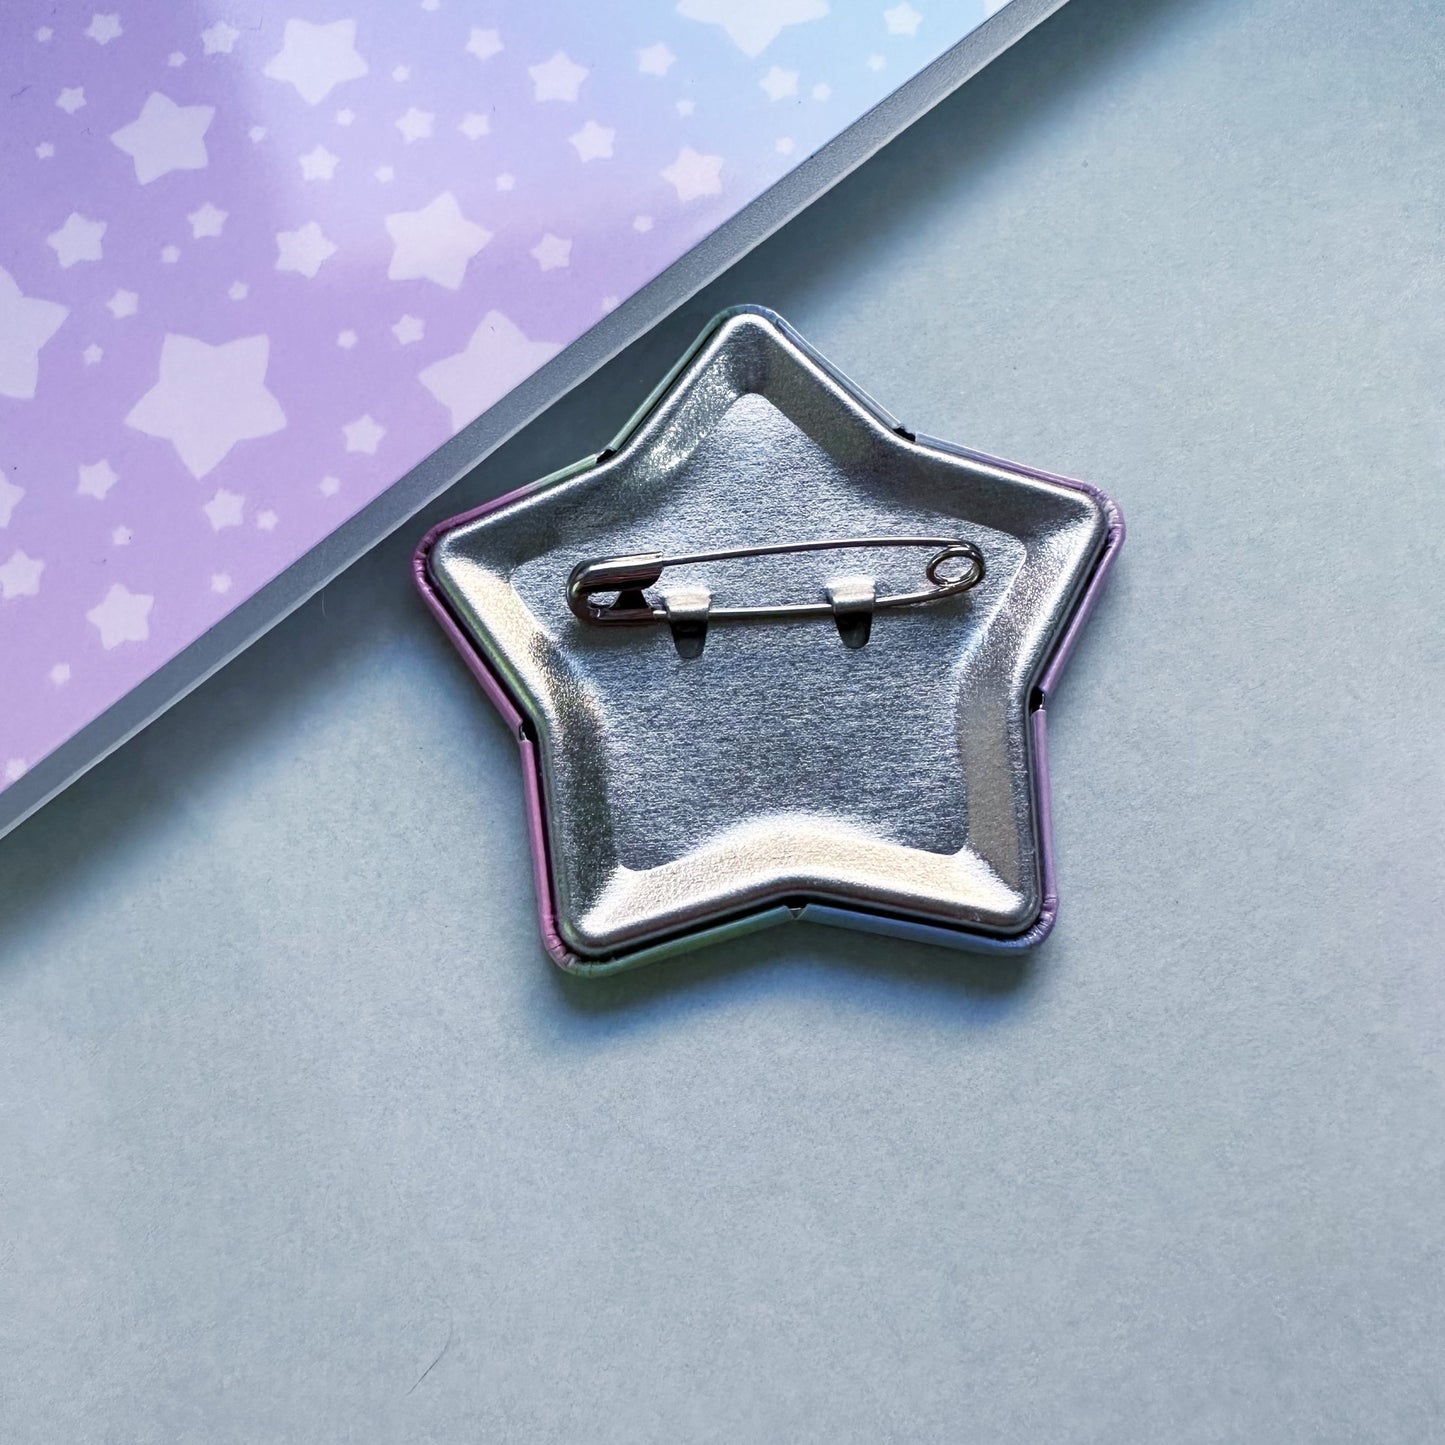 Stationery Lover star badge